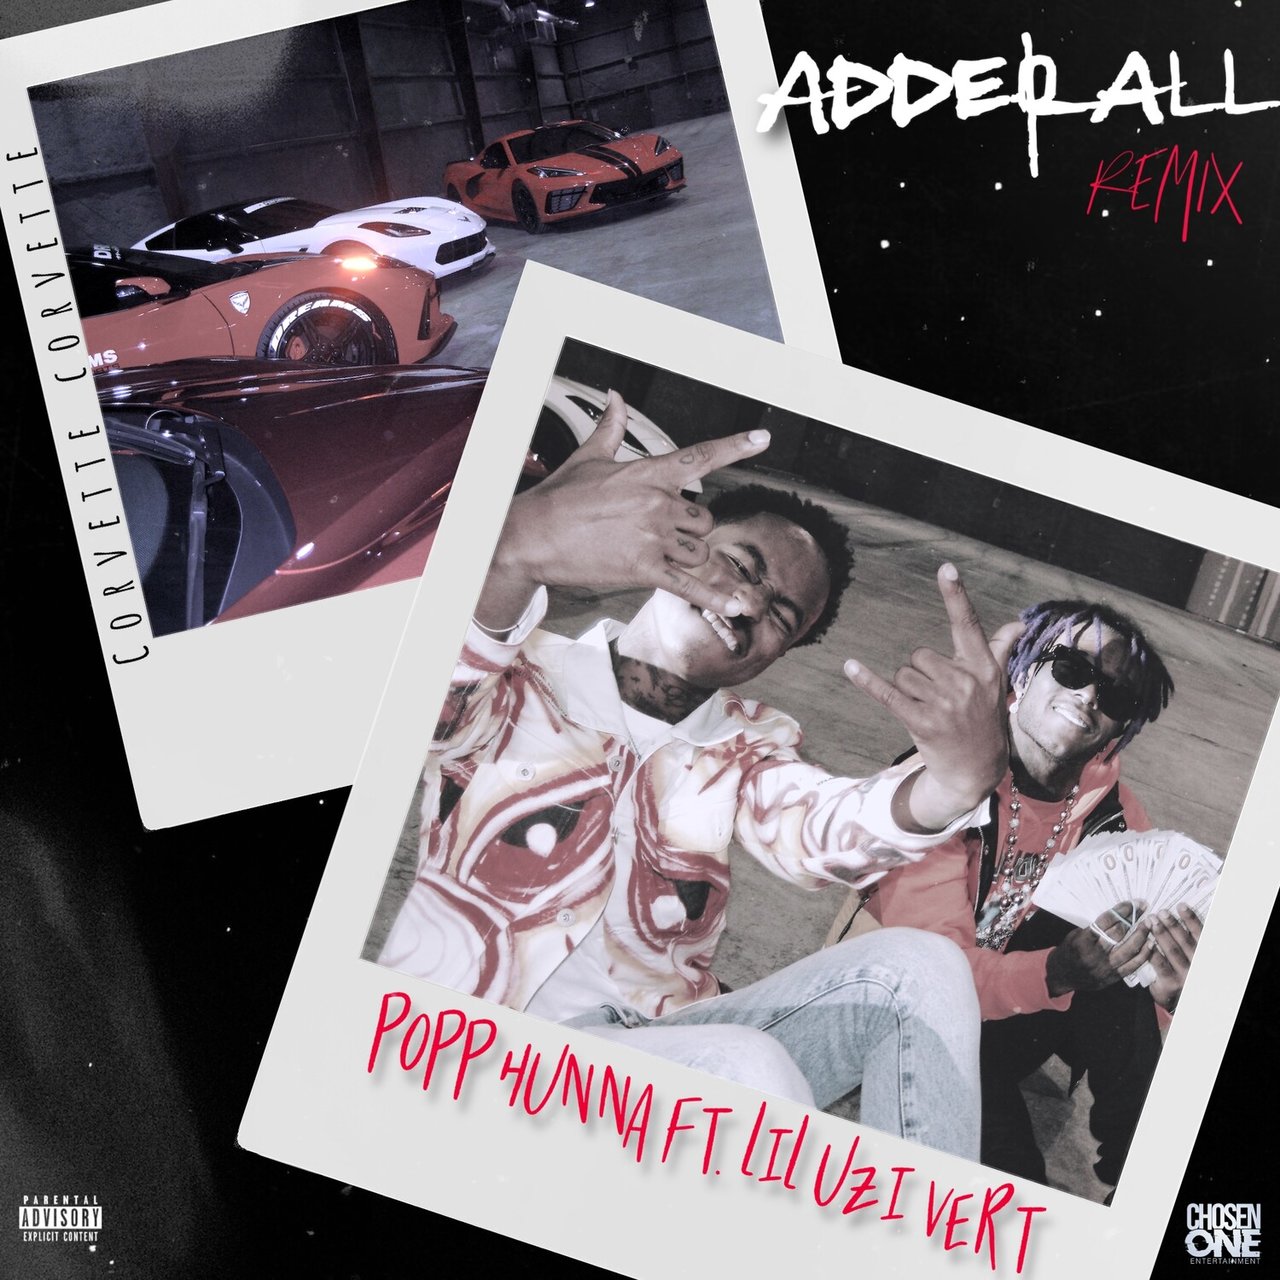 Popp Hunna - Adderall (Corvette Corvette) (Remix) (ft. Lil Uzi Vert) (Cover)